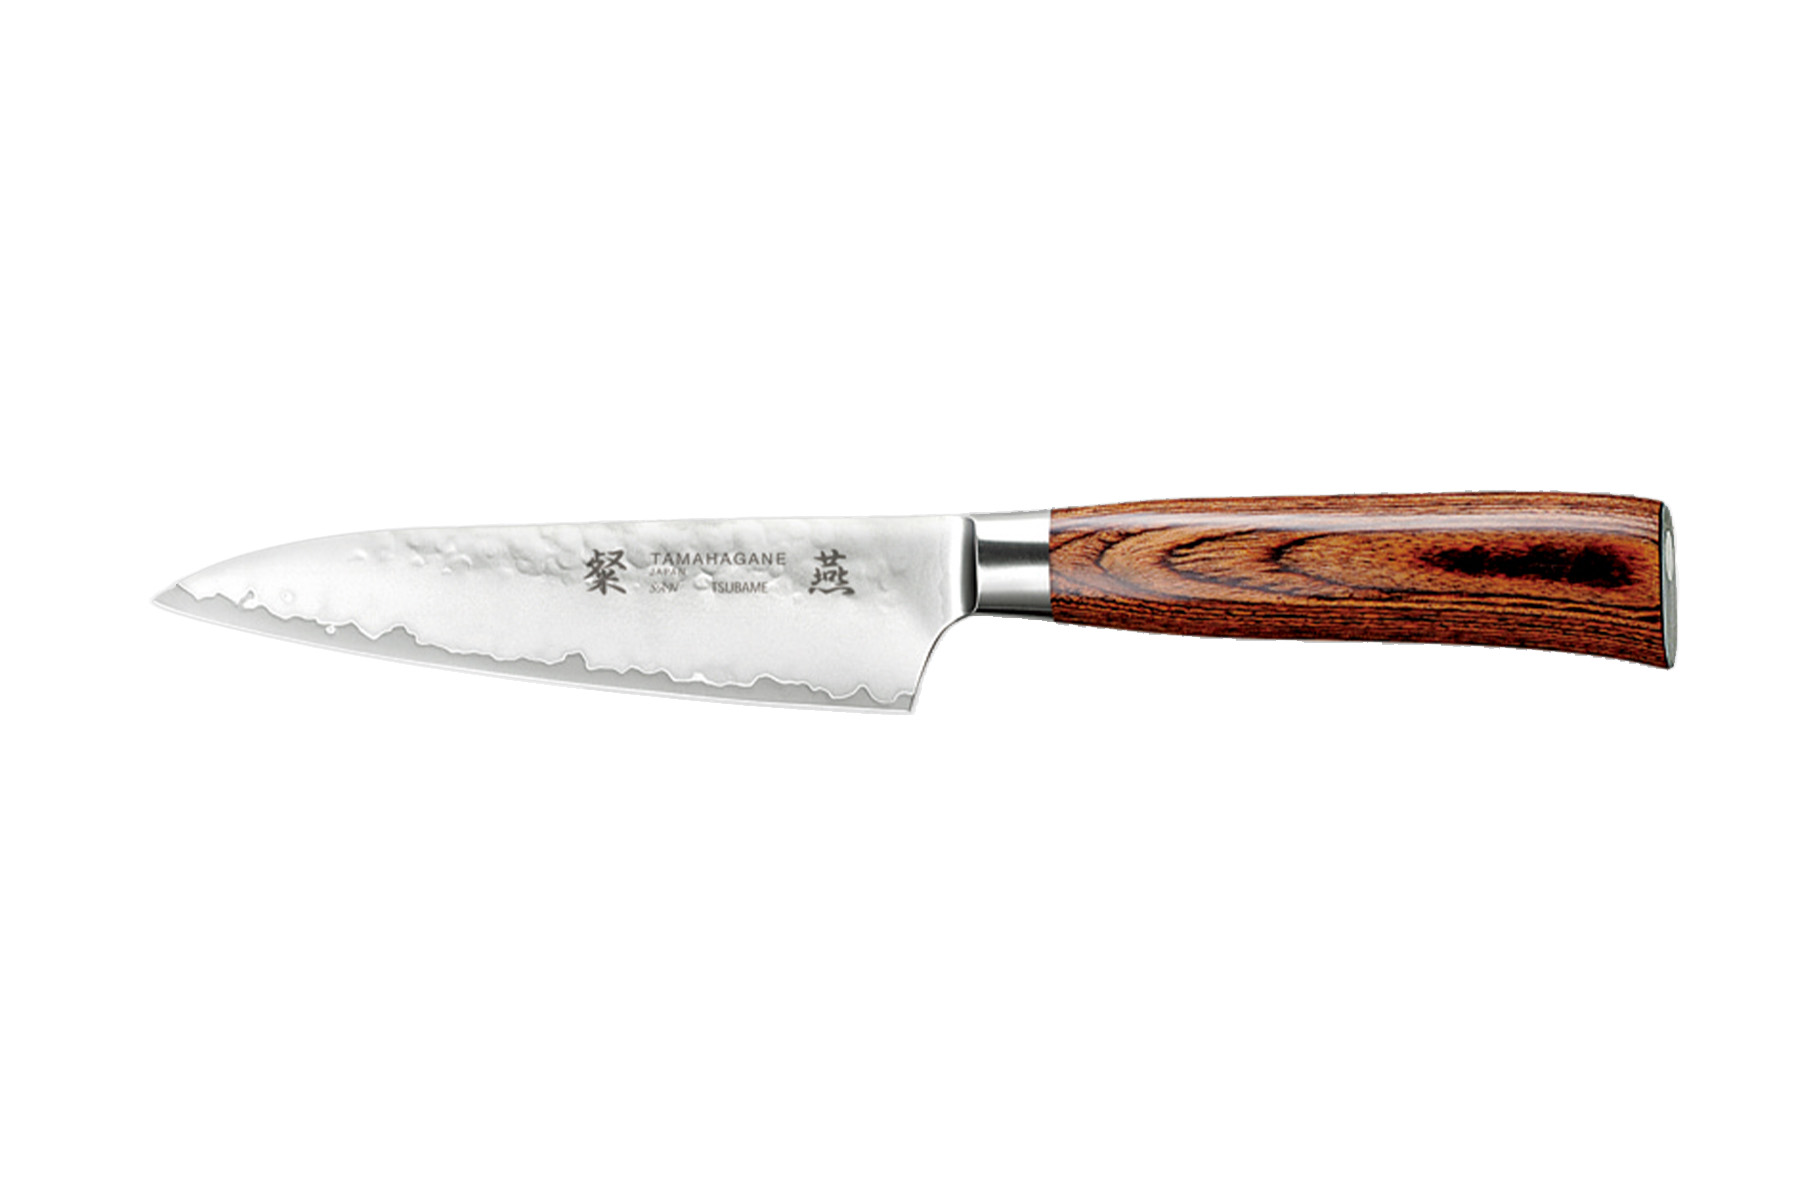 Couteau japonais Tamahagane Tsubame pakkawood - couteau petty 12 cm